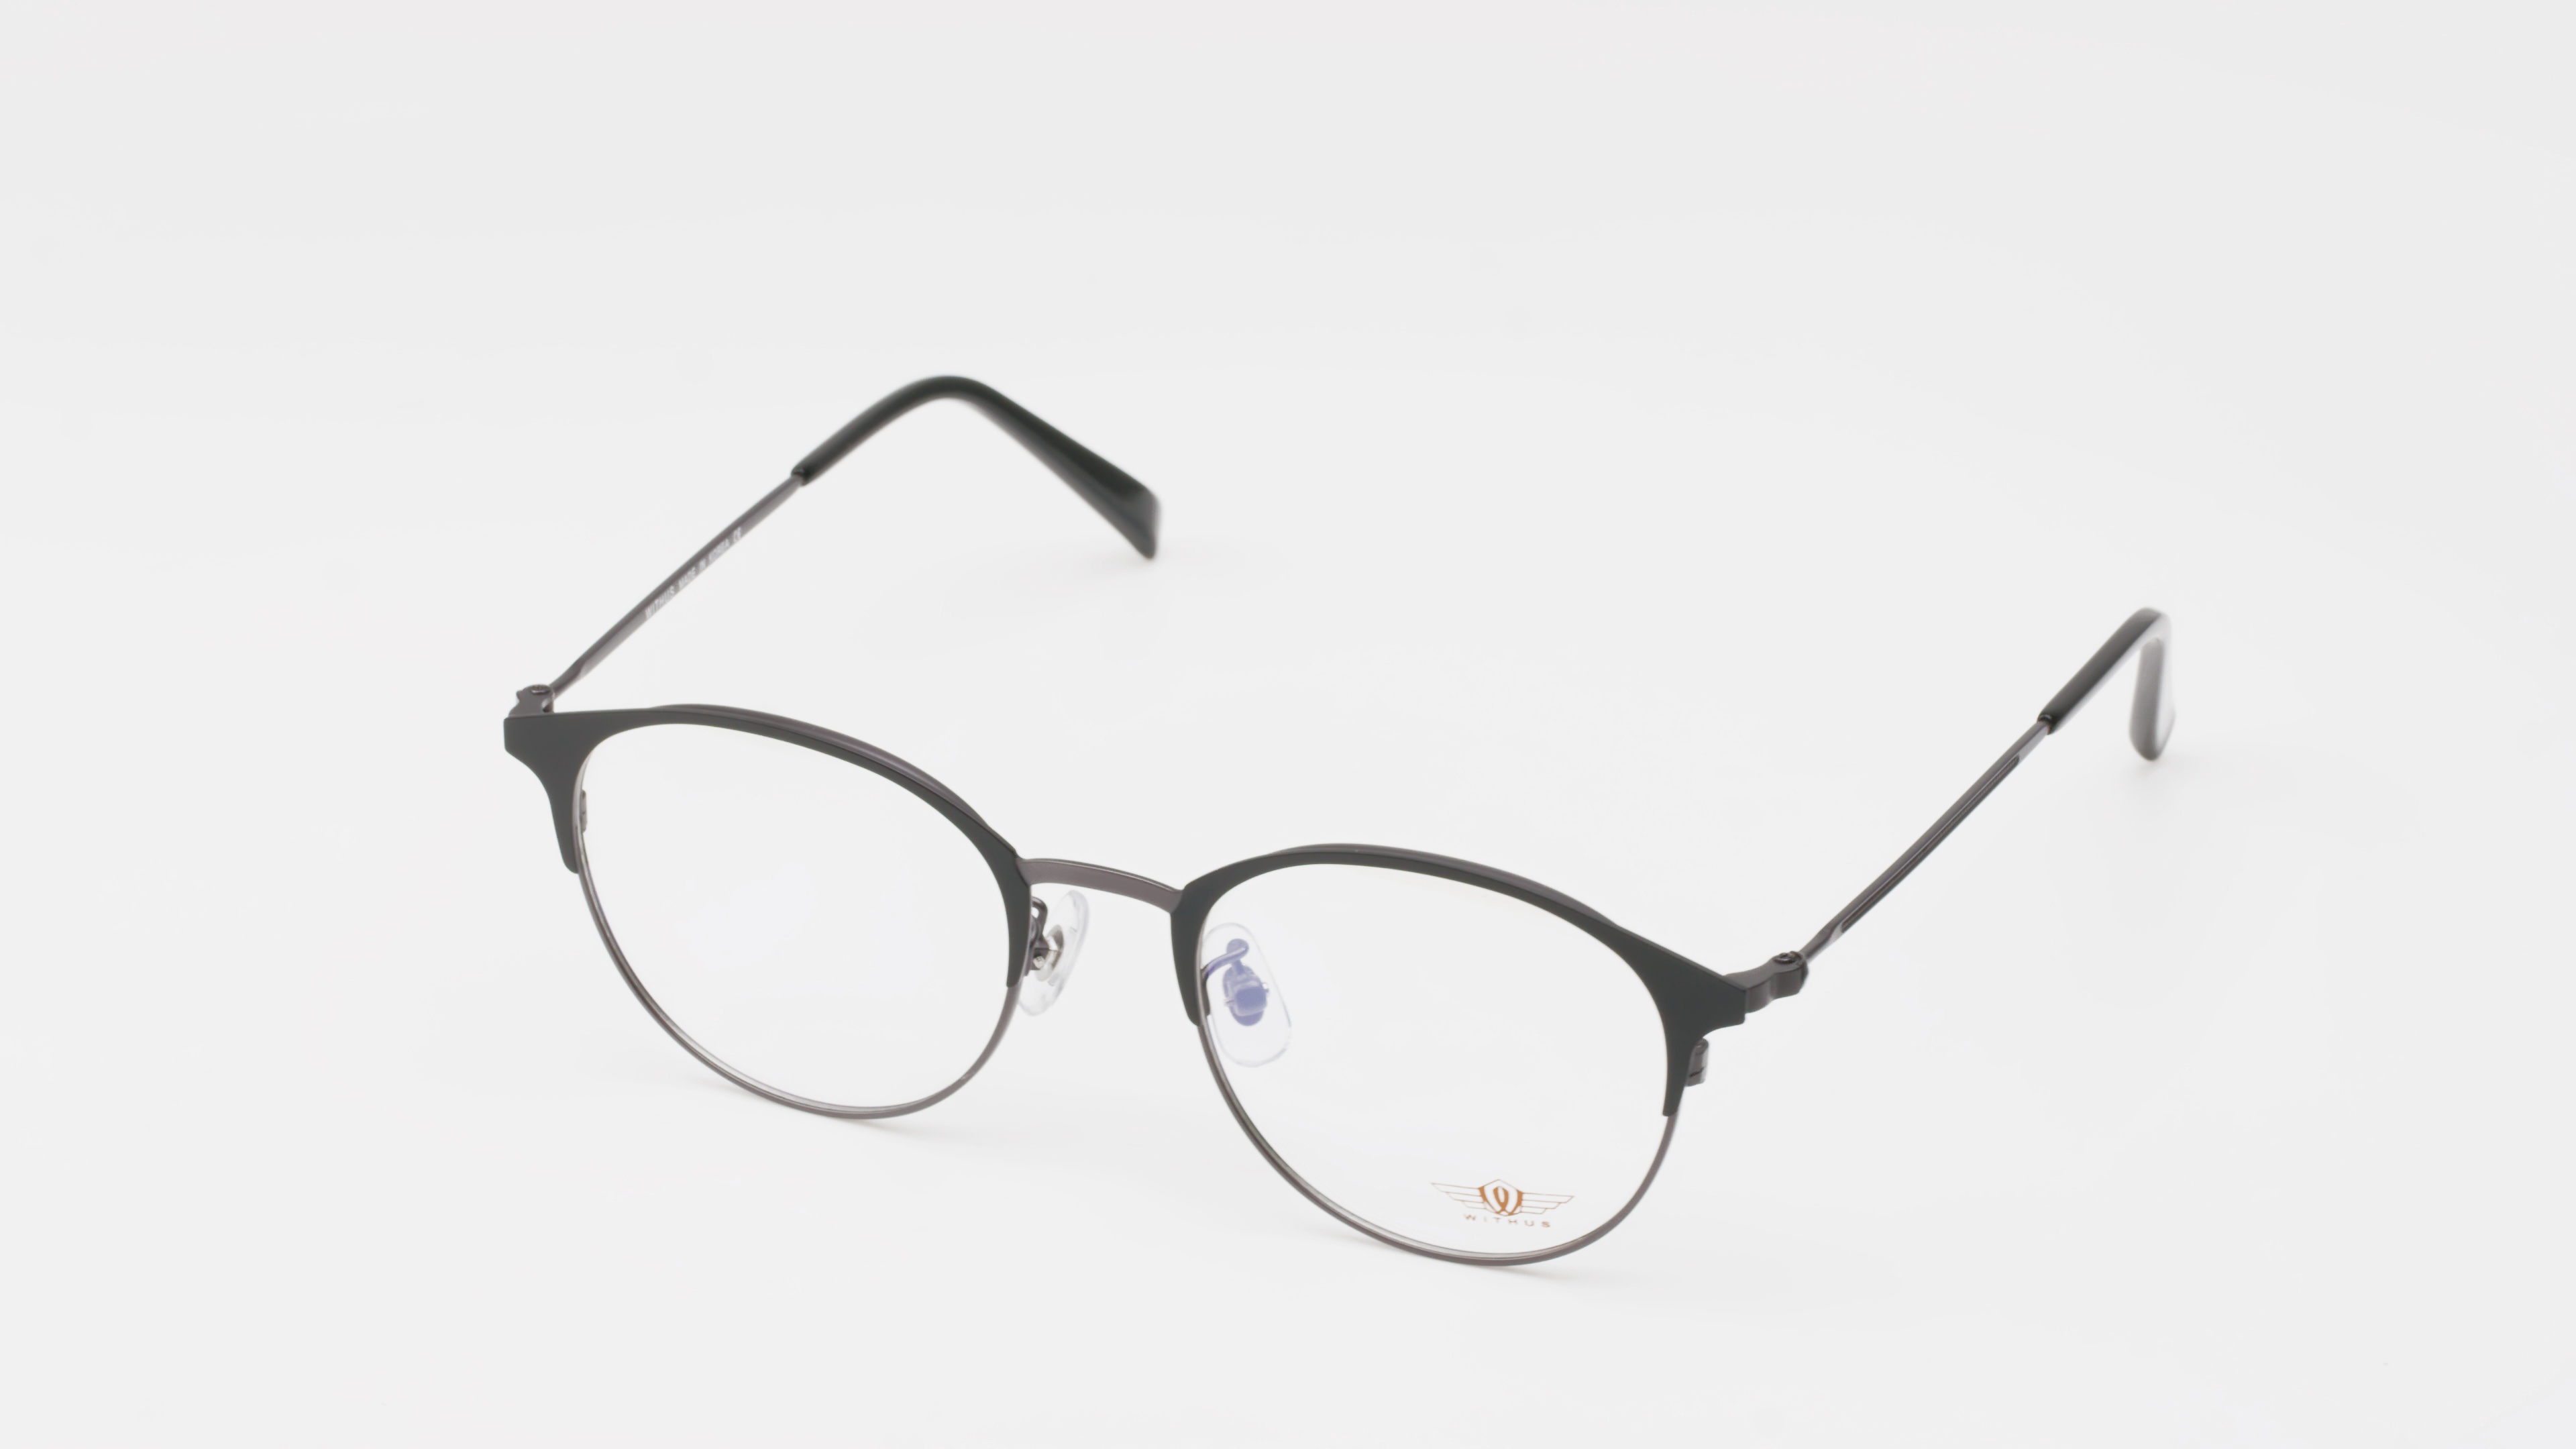 CHORONG Glasses Frame for RX